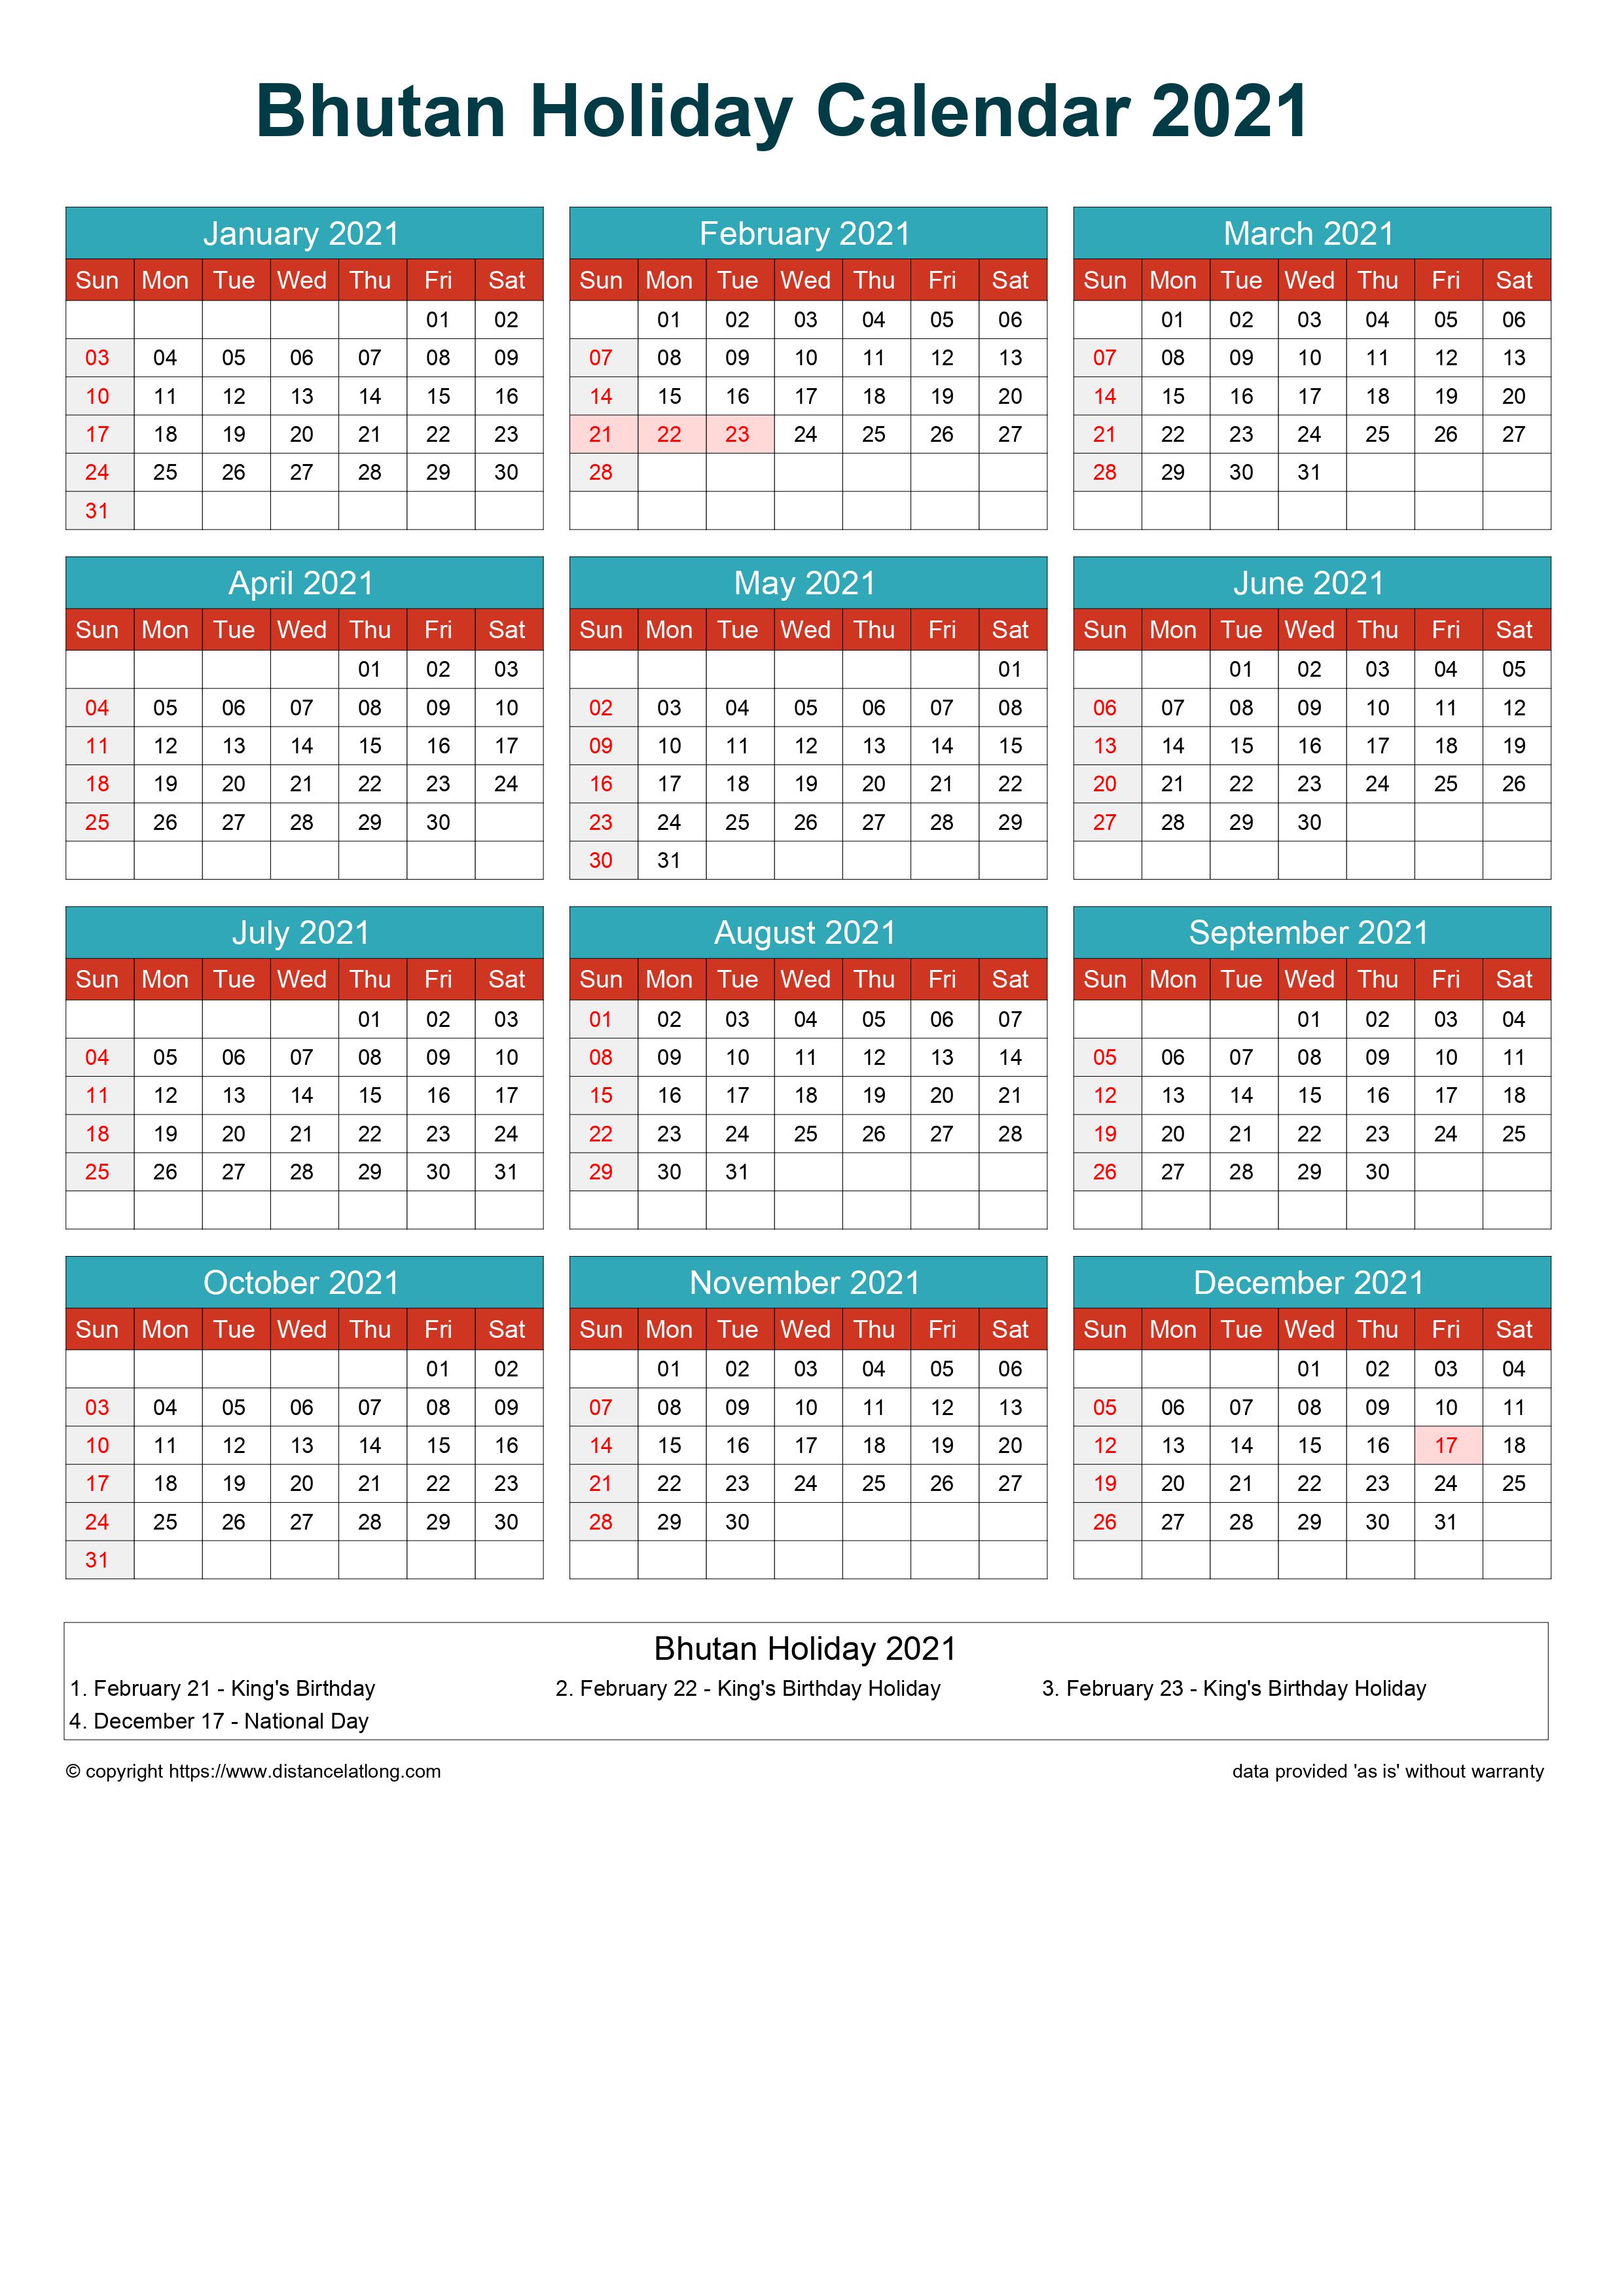 Bhutan Holiday Calendar 2021 JPG Templates